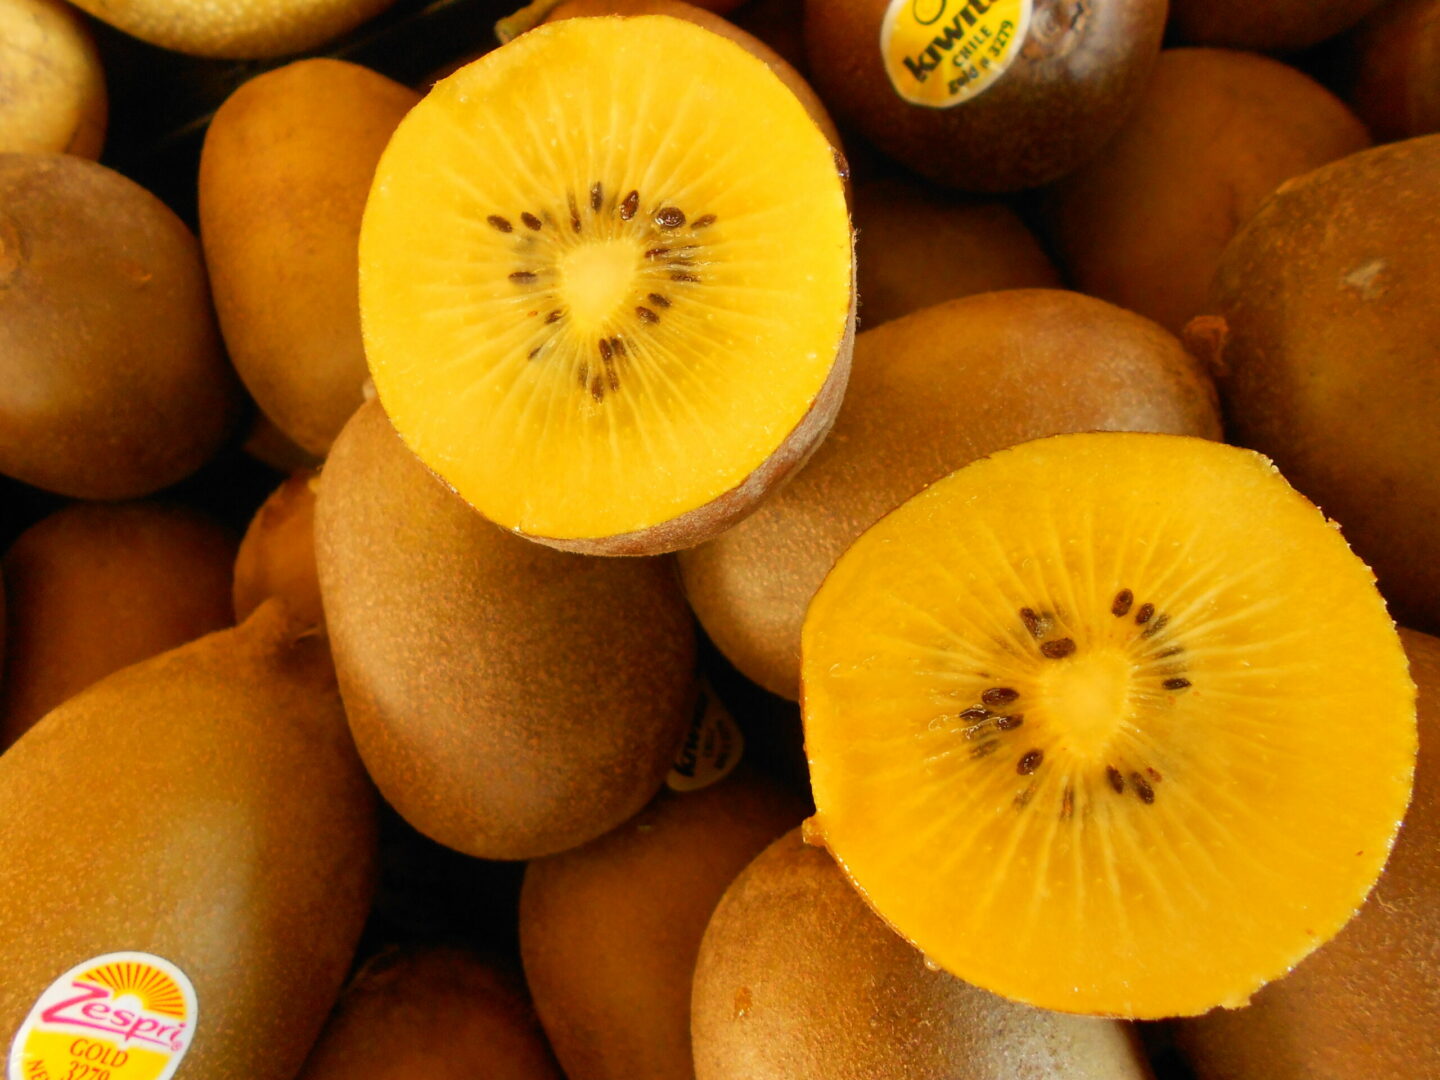 Gold Kiwifruit - Dan the Produce Man